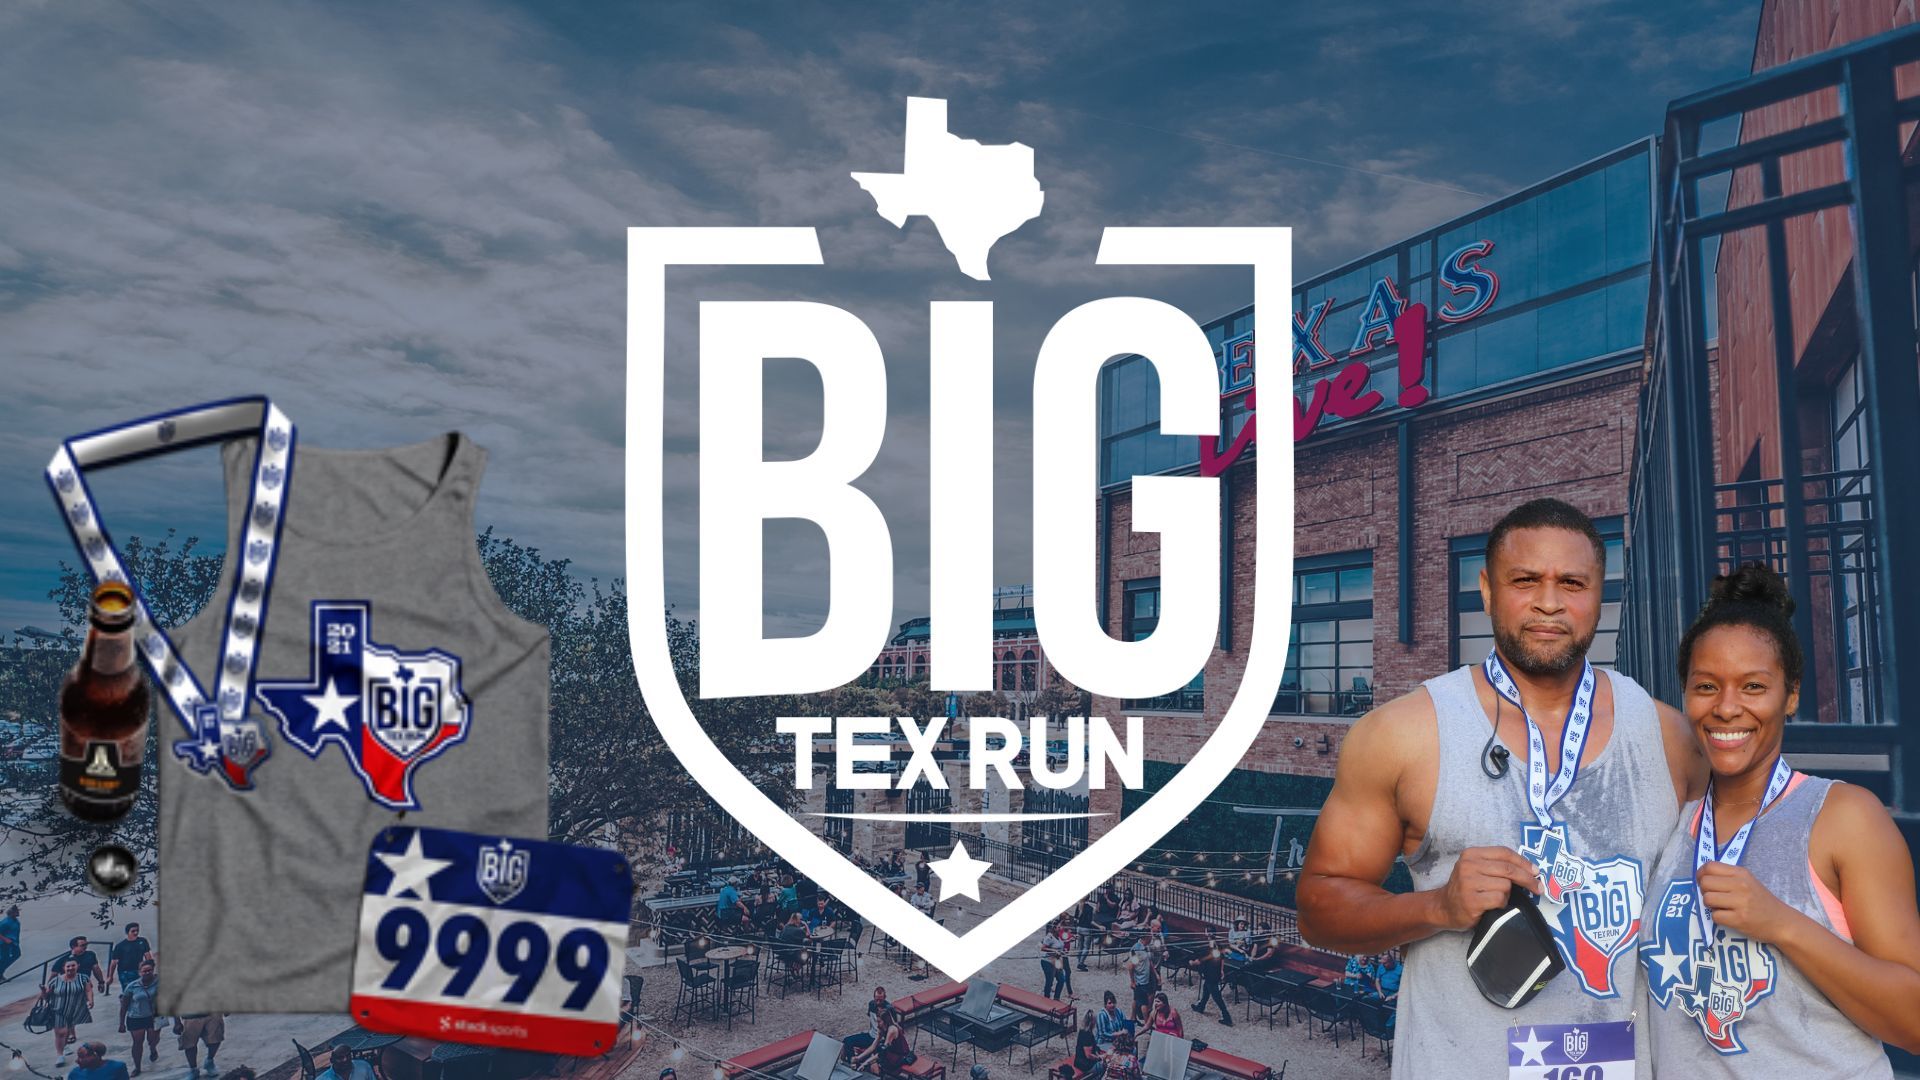 Big Tex Run - 5K / 10K, Arlington, Texas, United States